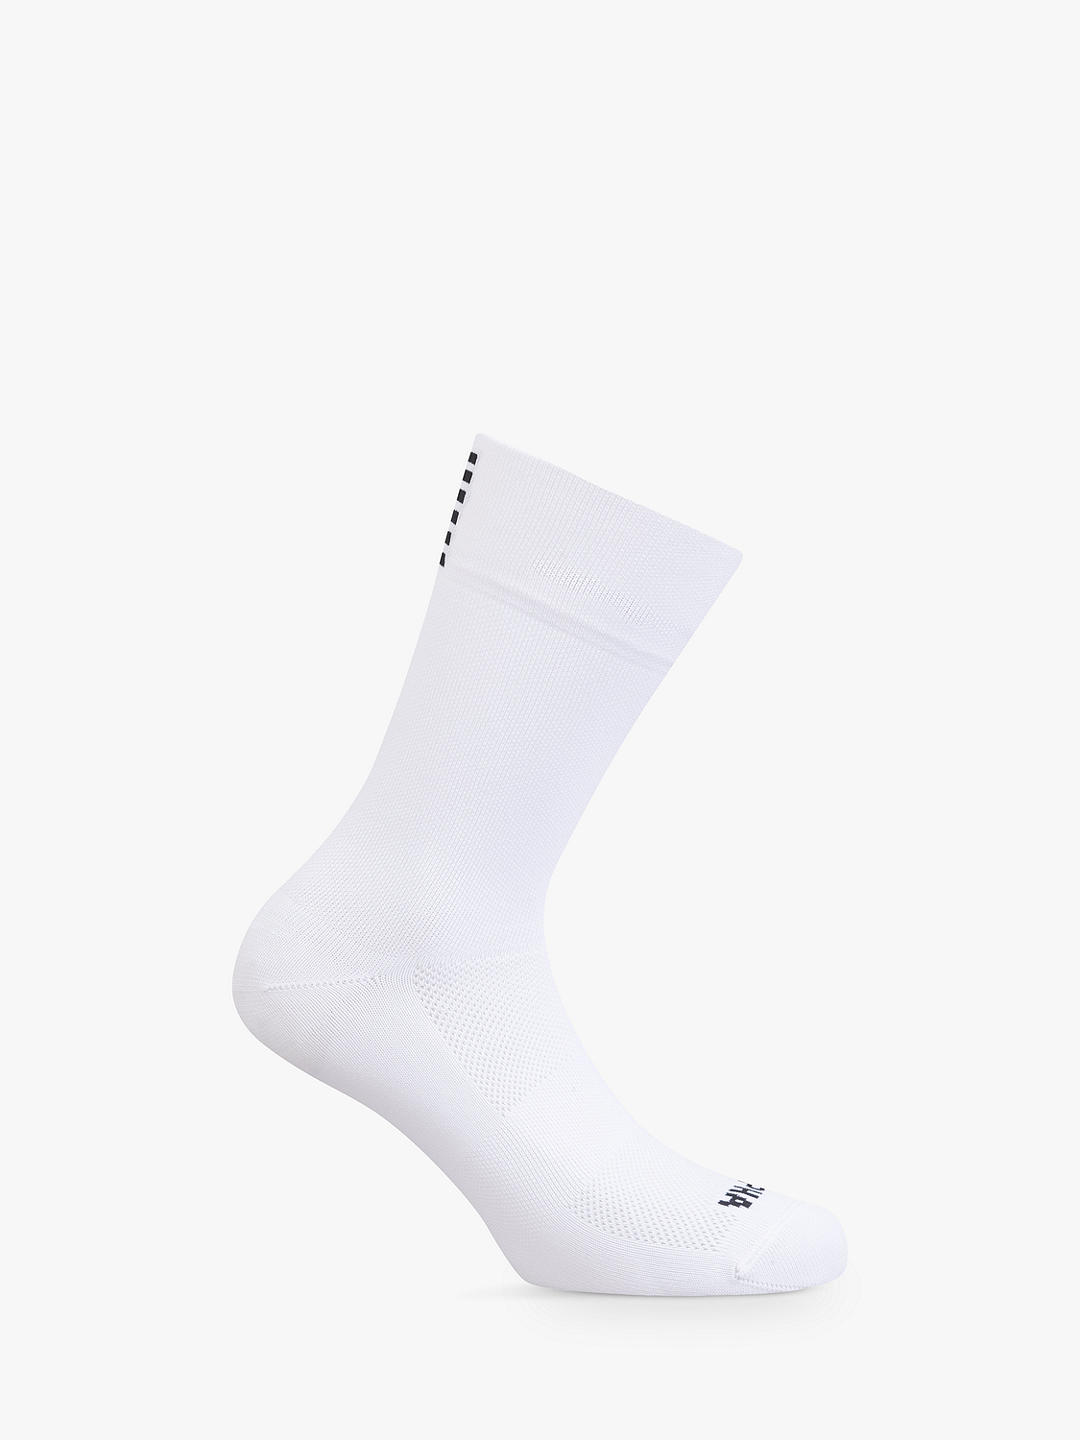 Rapha Pro Team Socks, White